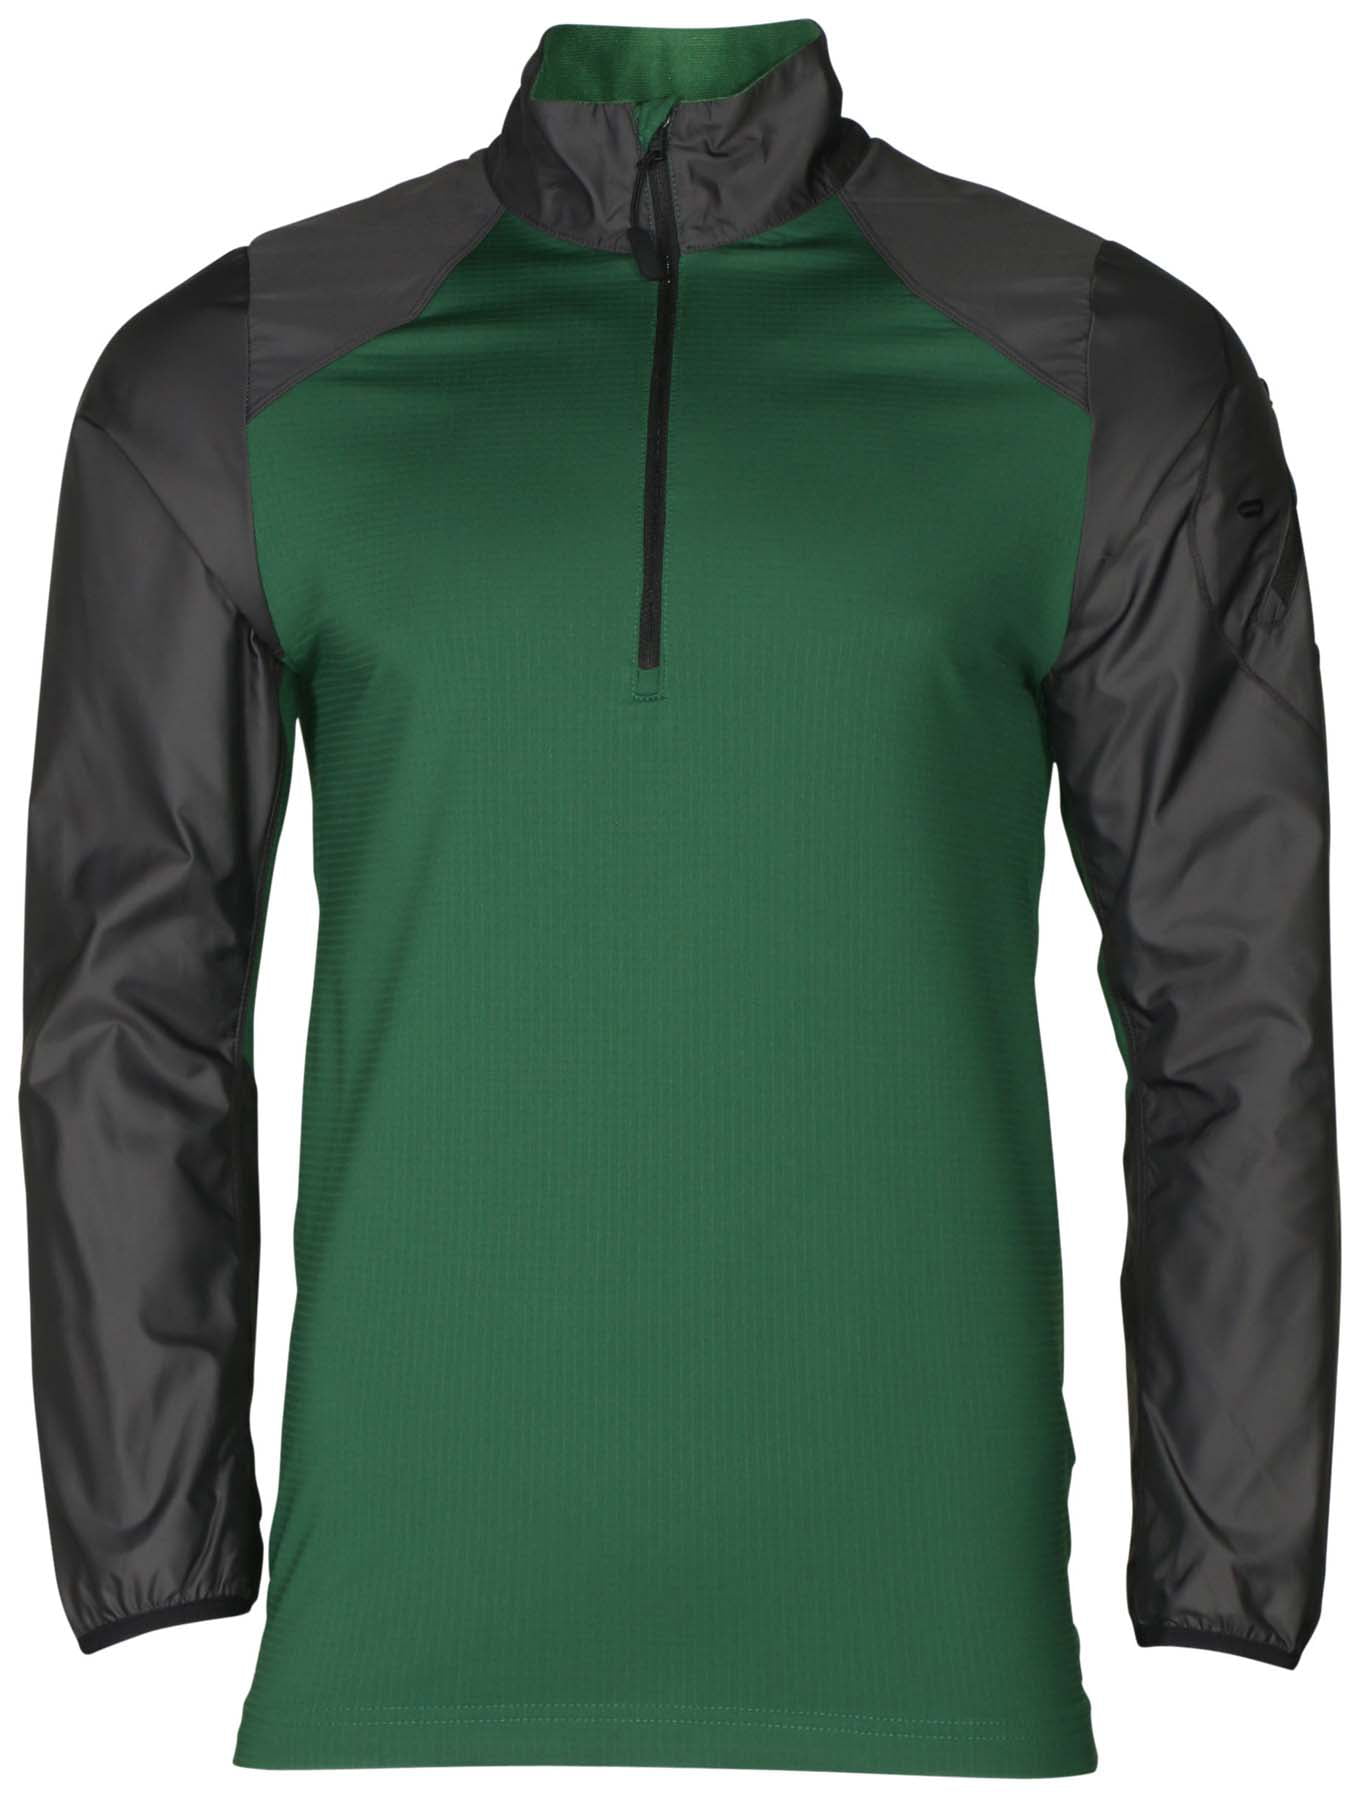 Download Nike - Nike Men's Dri-Fit 1/2 Zip Hybrid Mock Neck Football Shirt - Walmart.com - Walmart.com